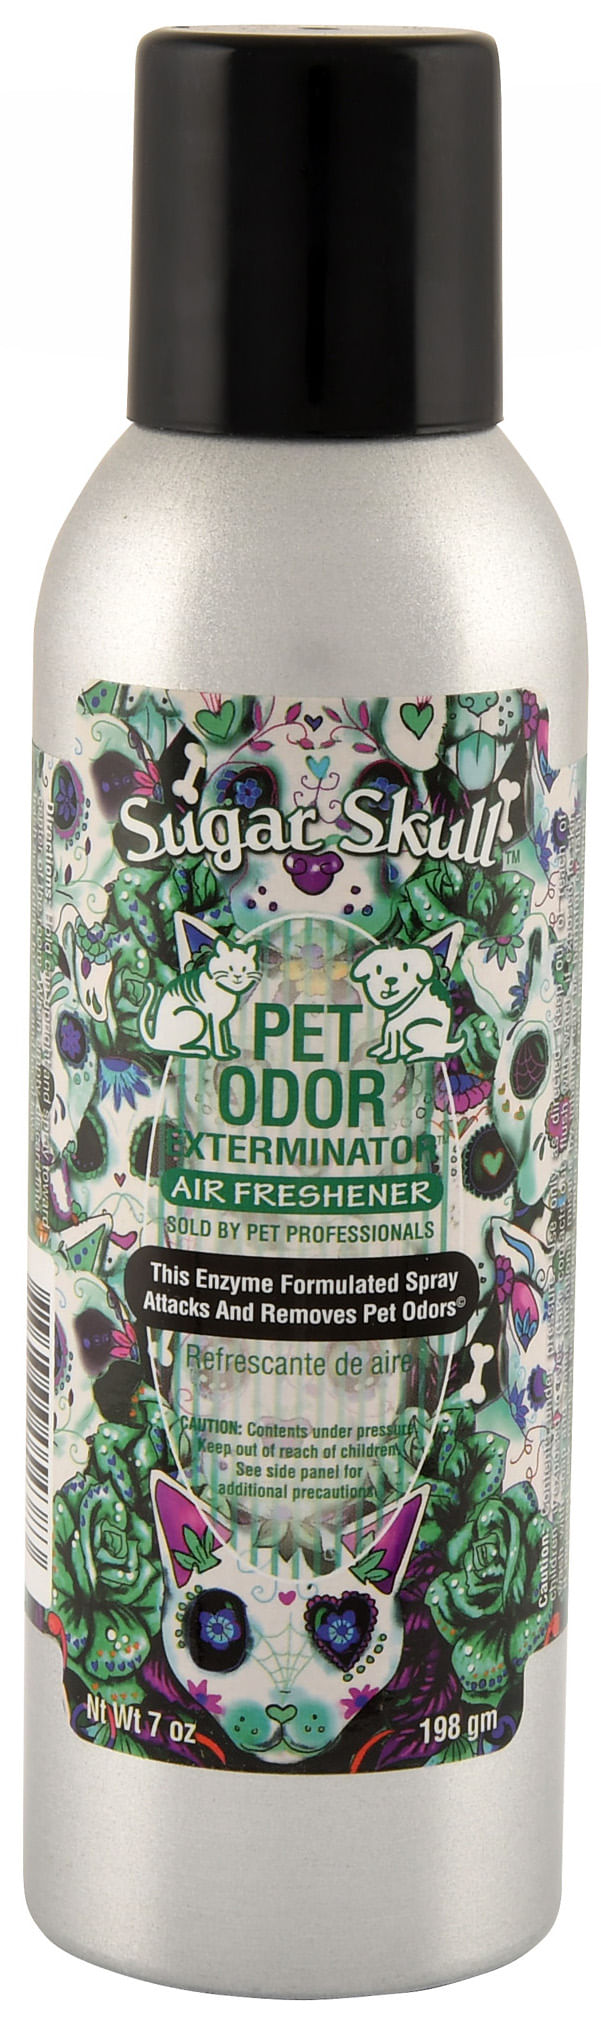 Pet-Odor-Exterminator-Air-Freshener-Sugar-Skull